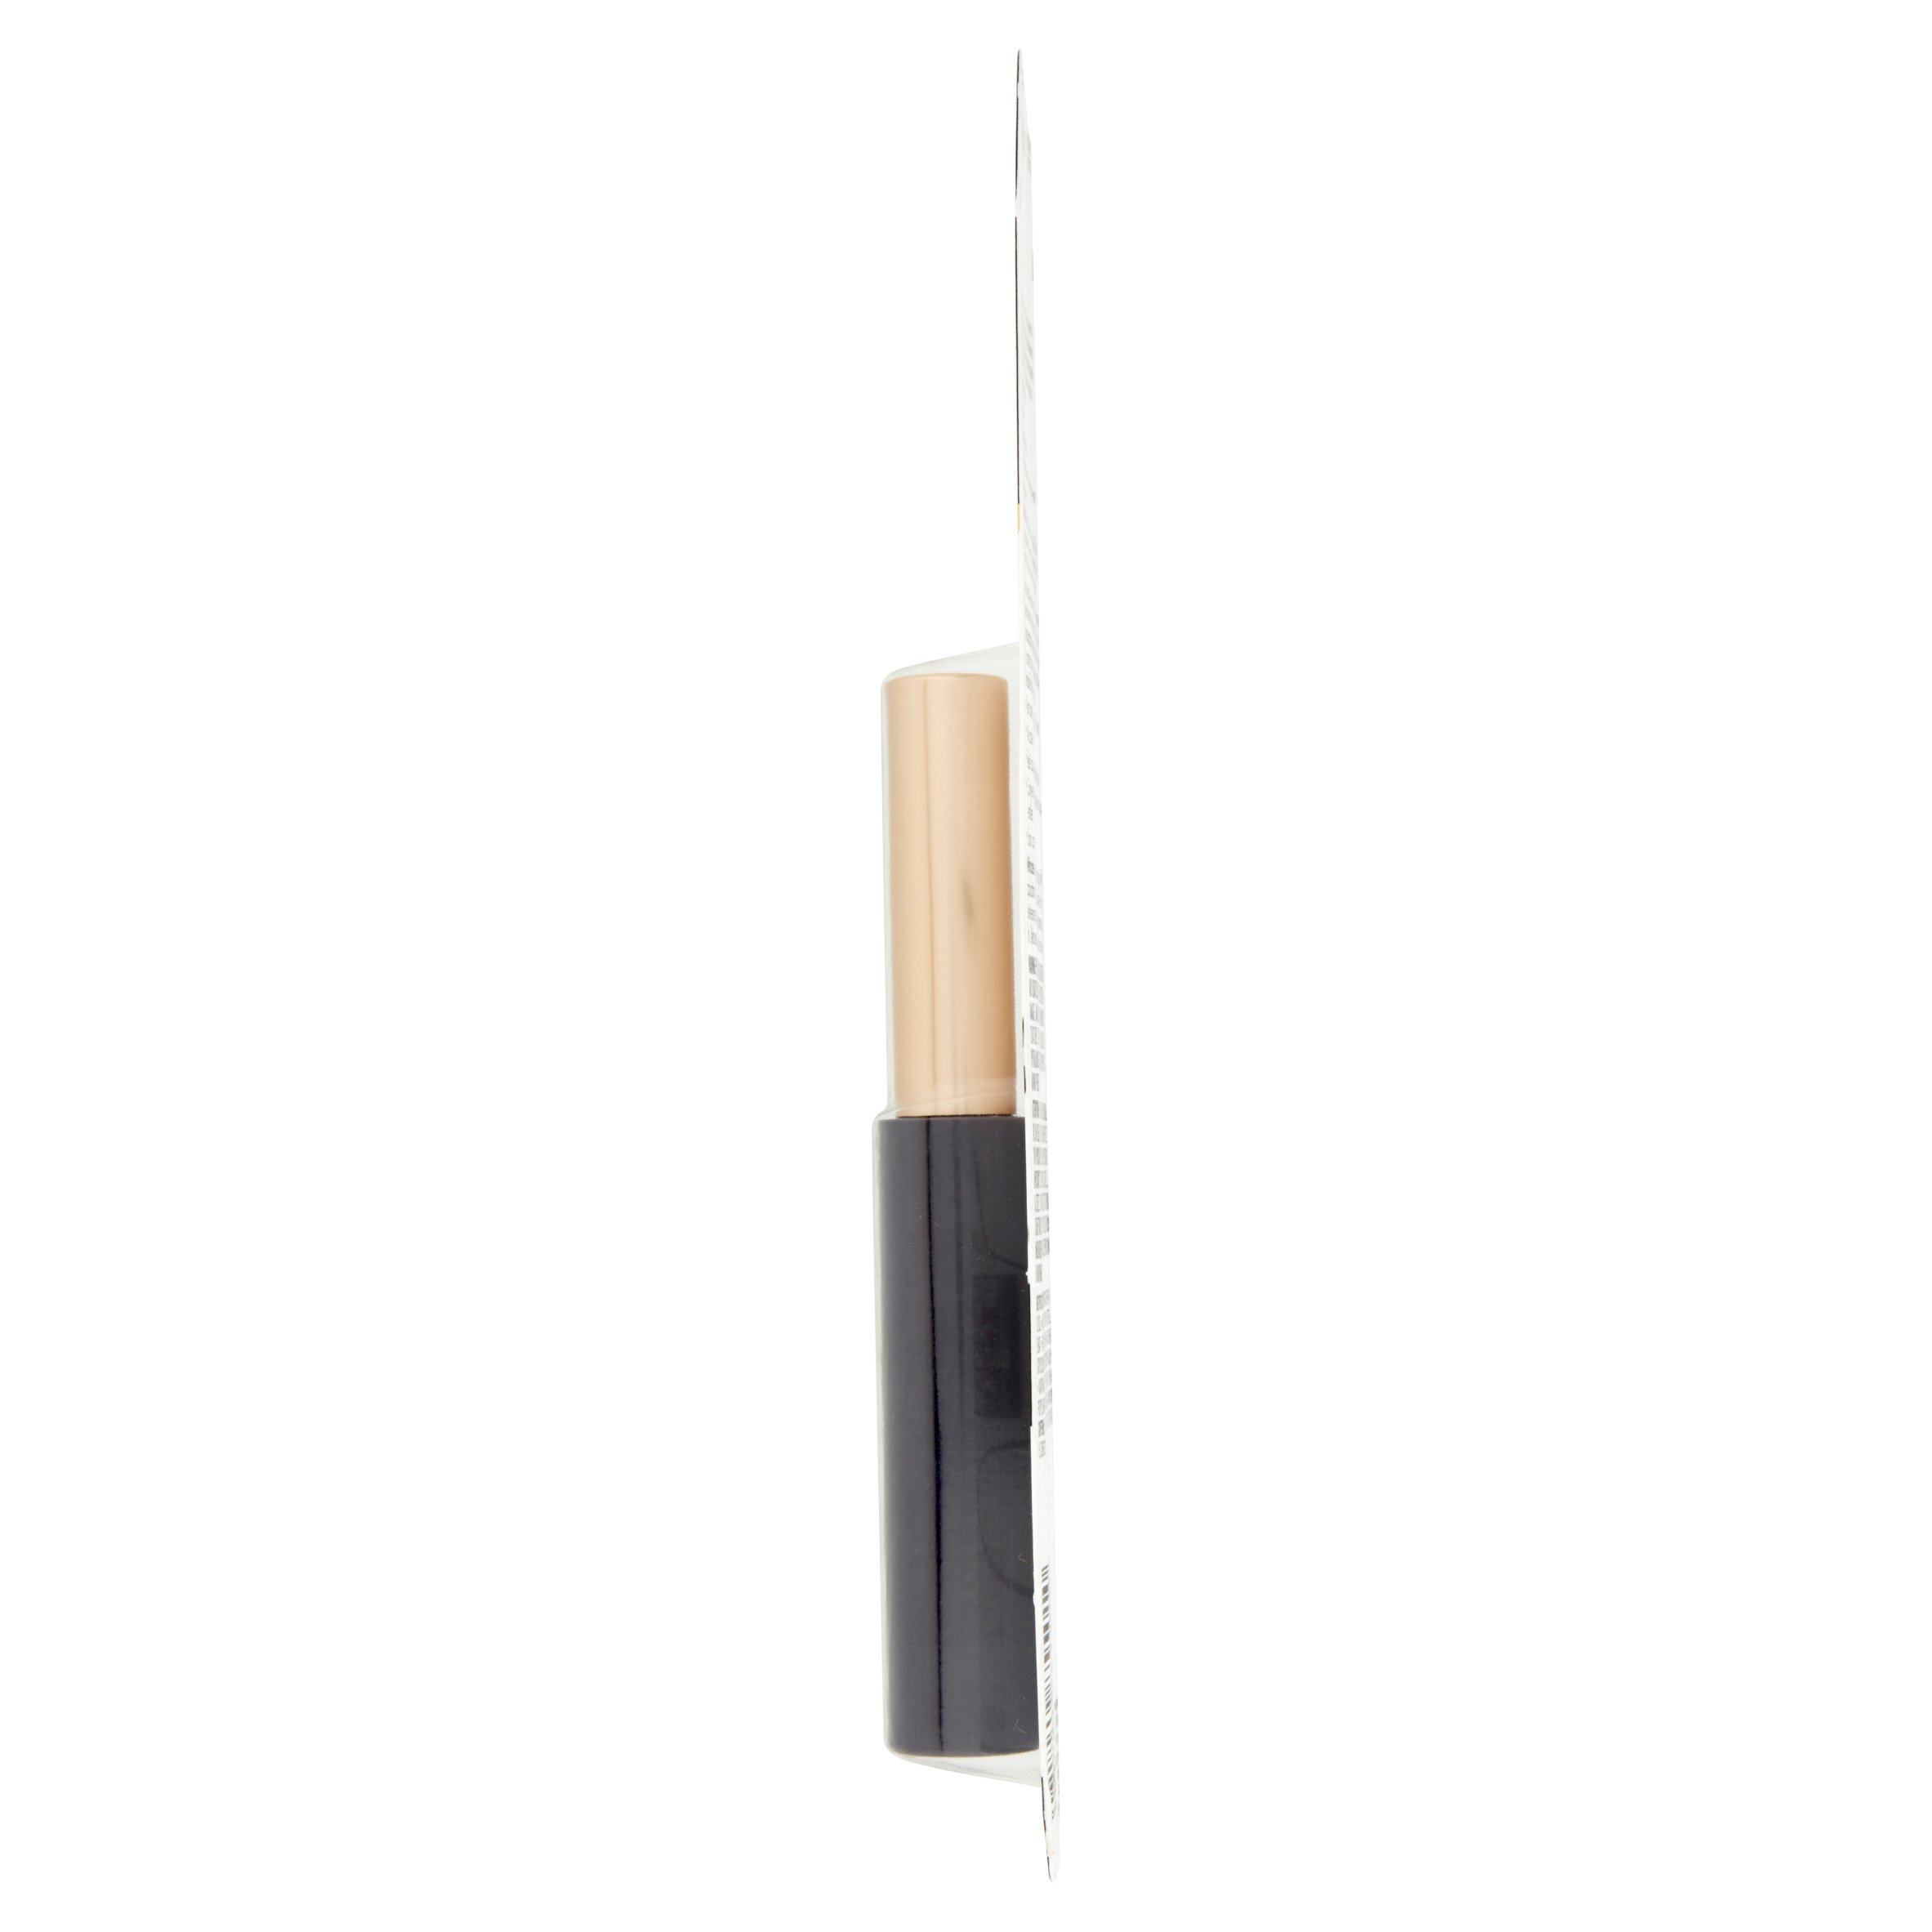 L'Oreal Paris Lineur Intense Brush Tip Liquid Eyeliner, Black - image 5 of 6